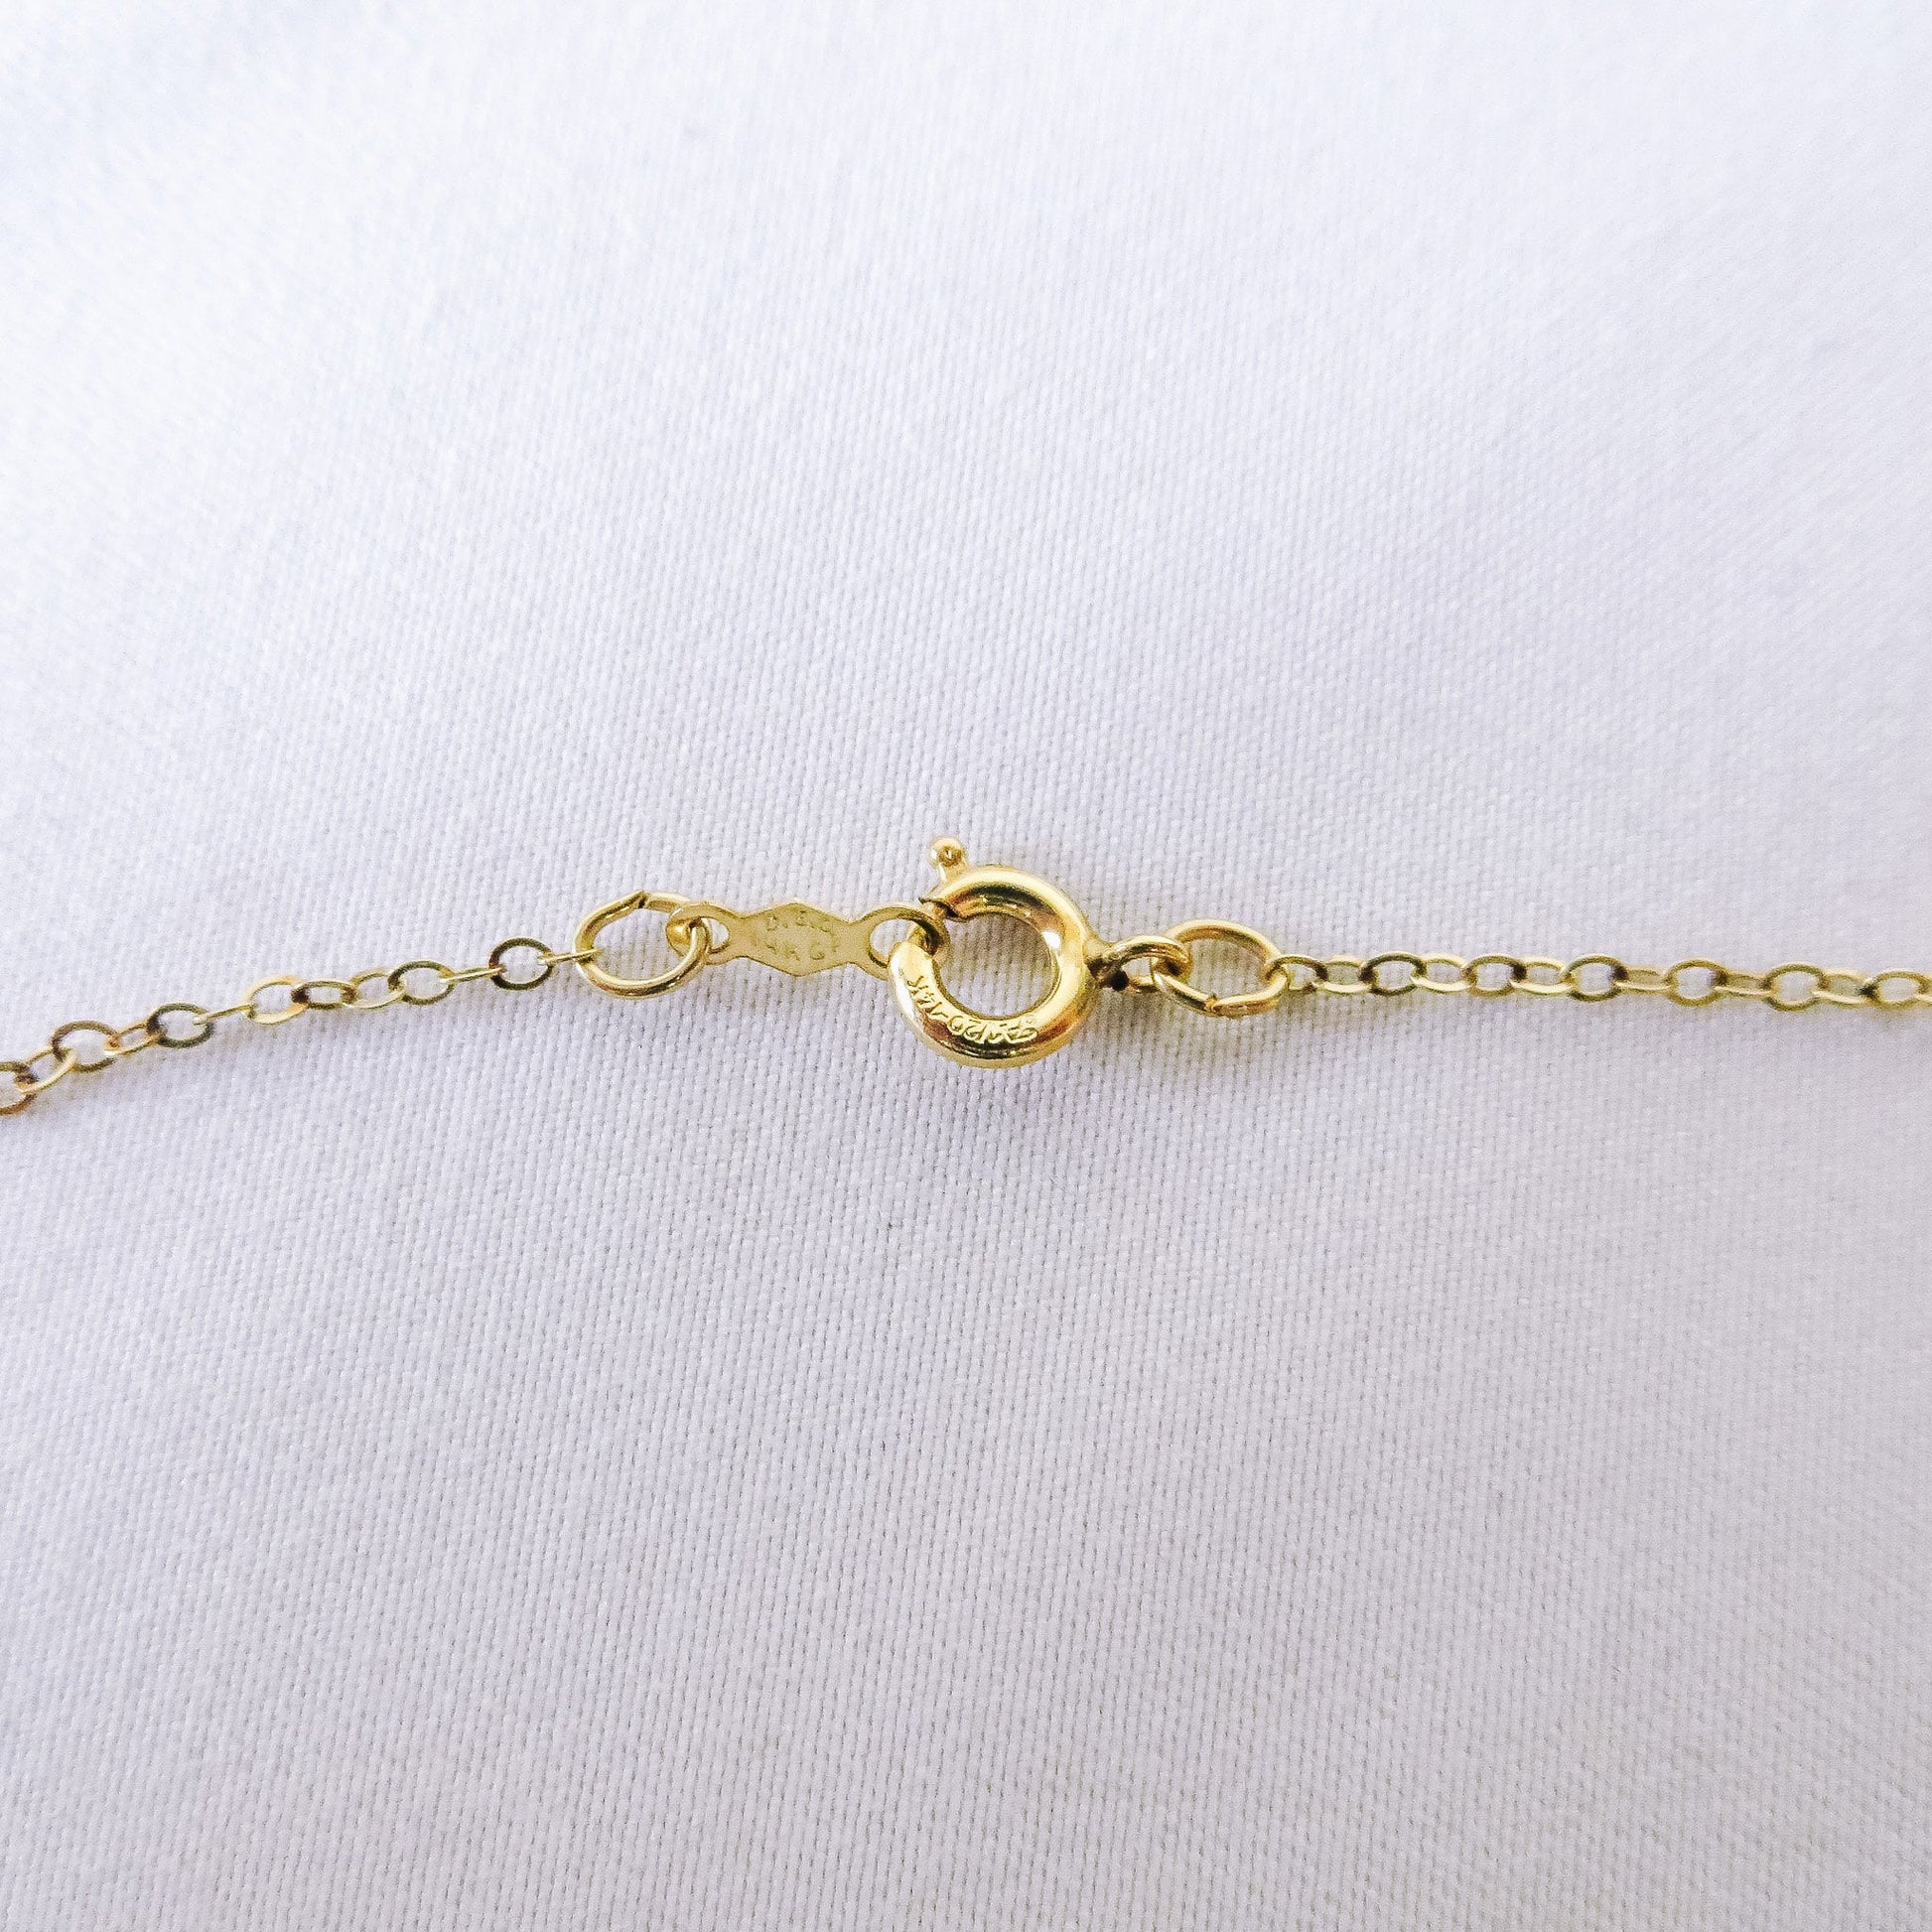 Vintage 14k Gold Filled Cut Out Heart Necklace, Simplistic Vintage Heart Necklace